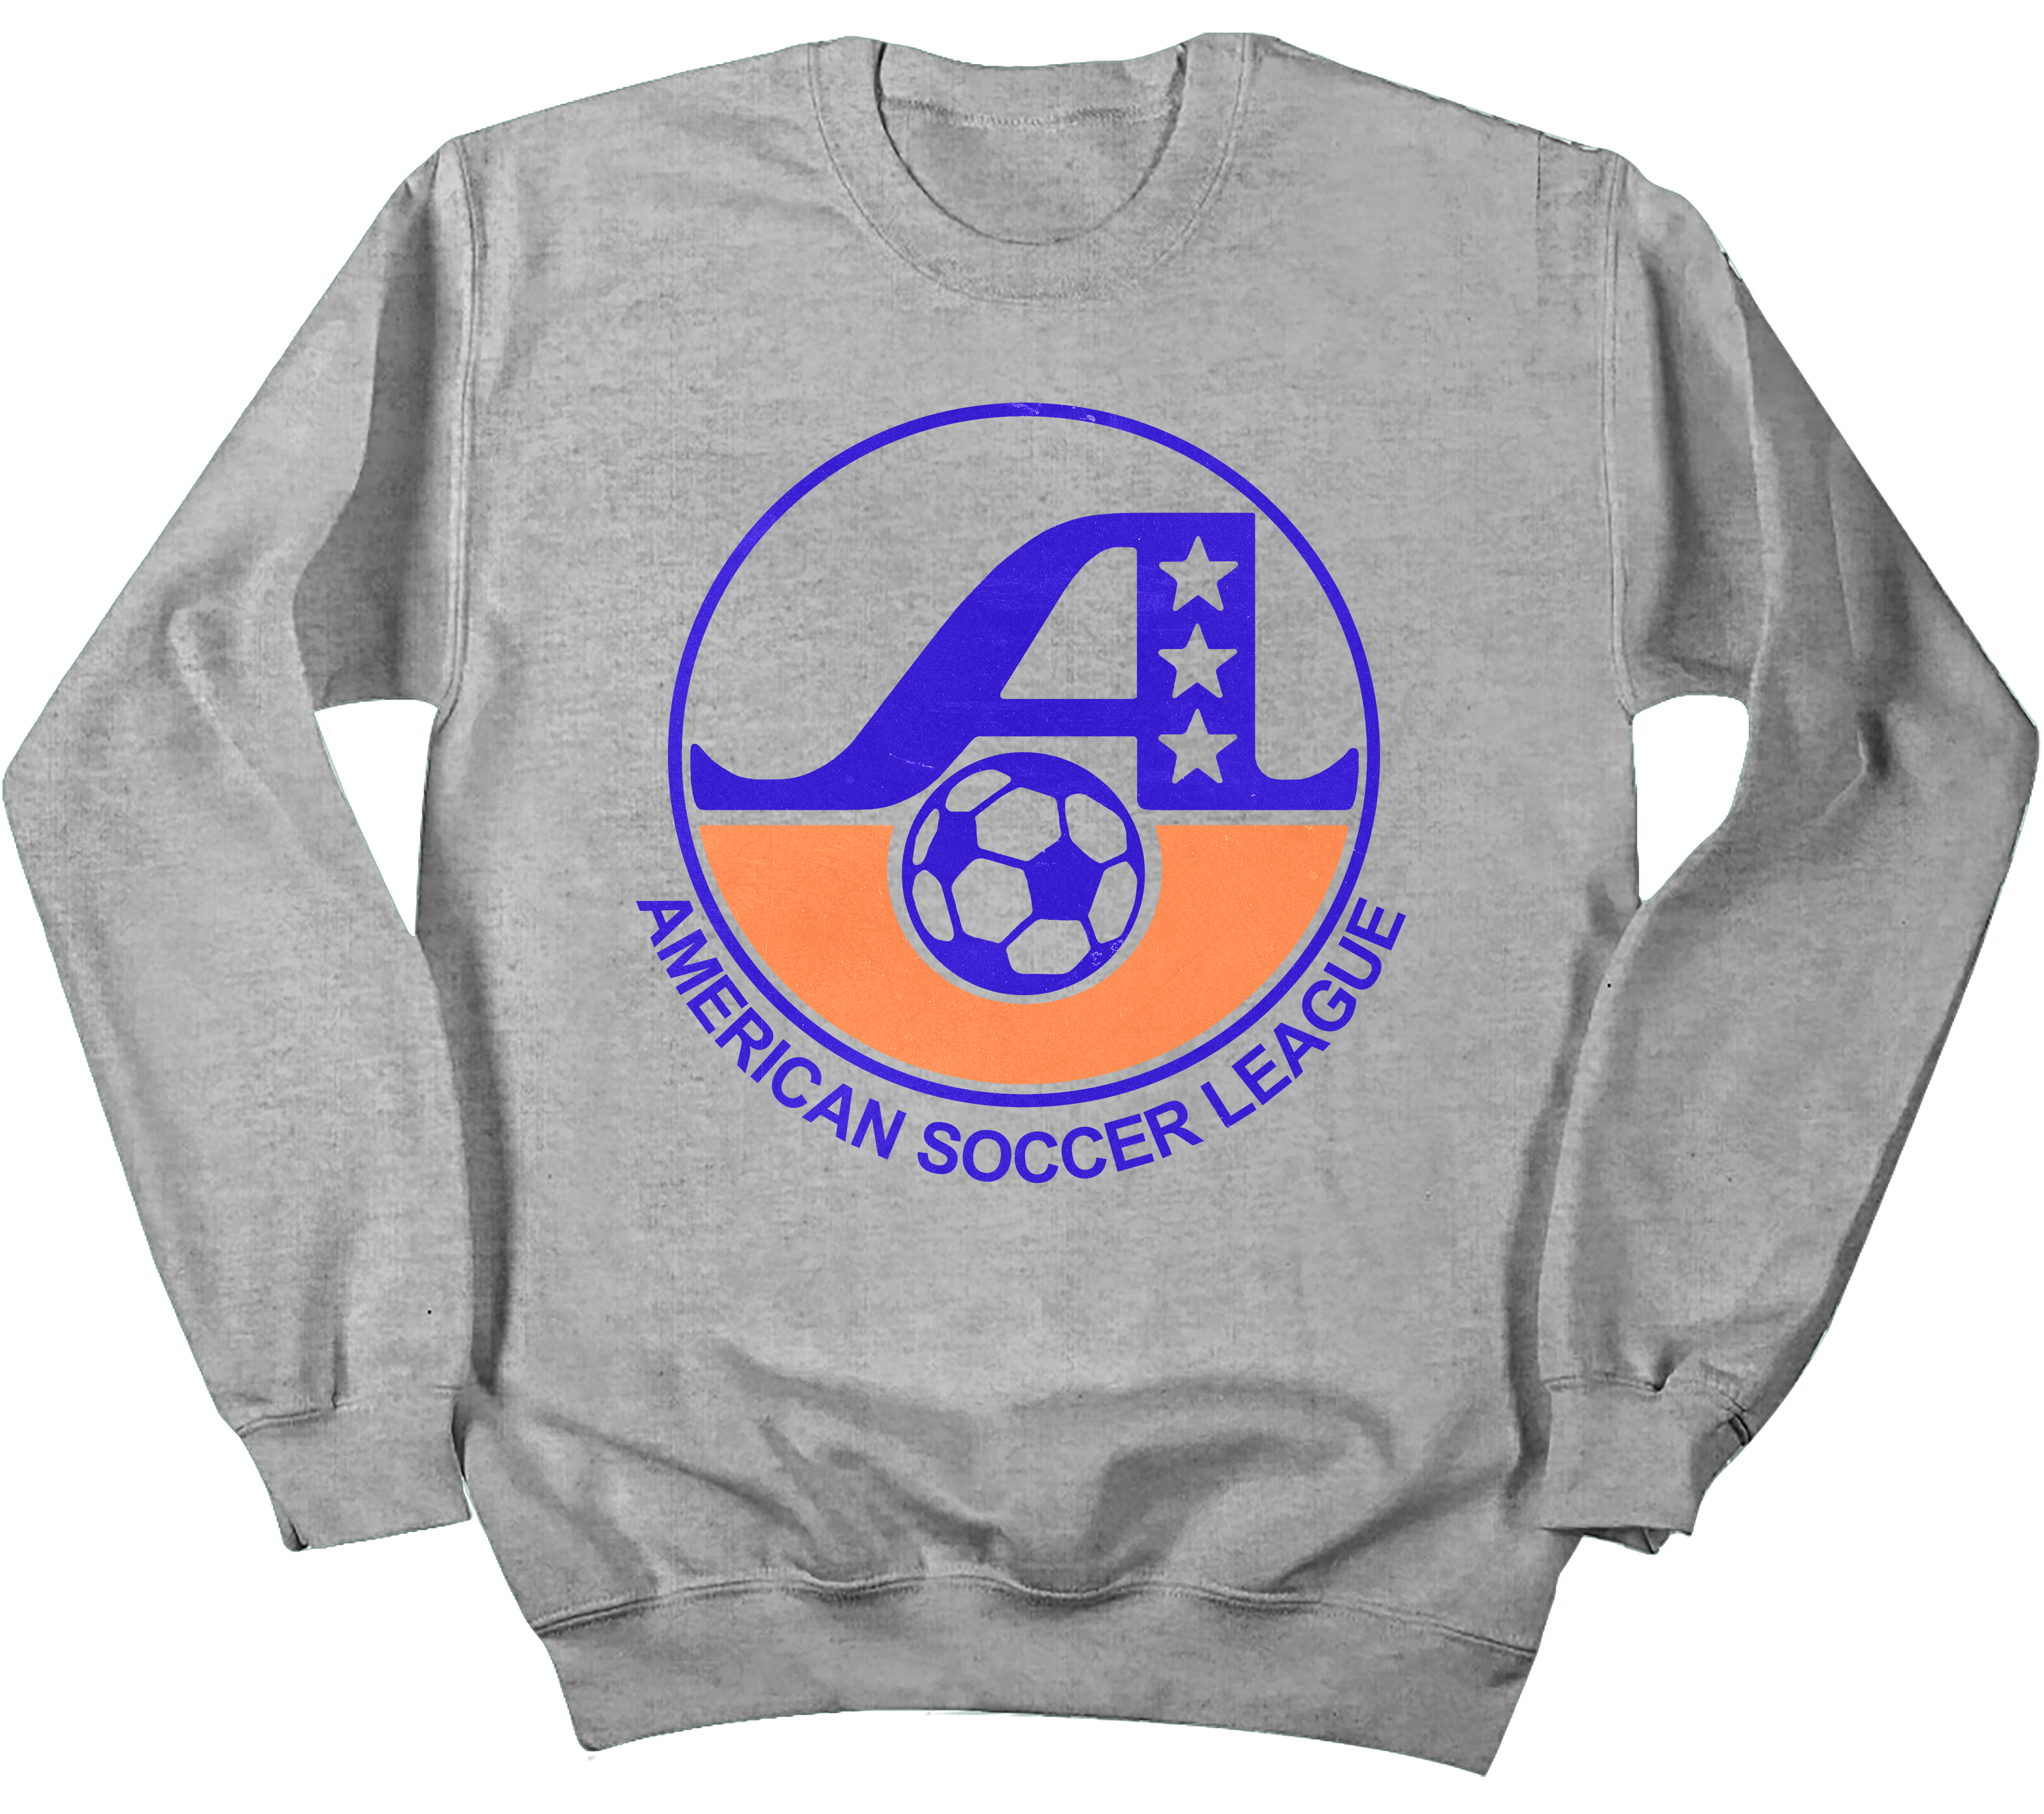 American Soccer League (1933-1983)